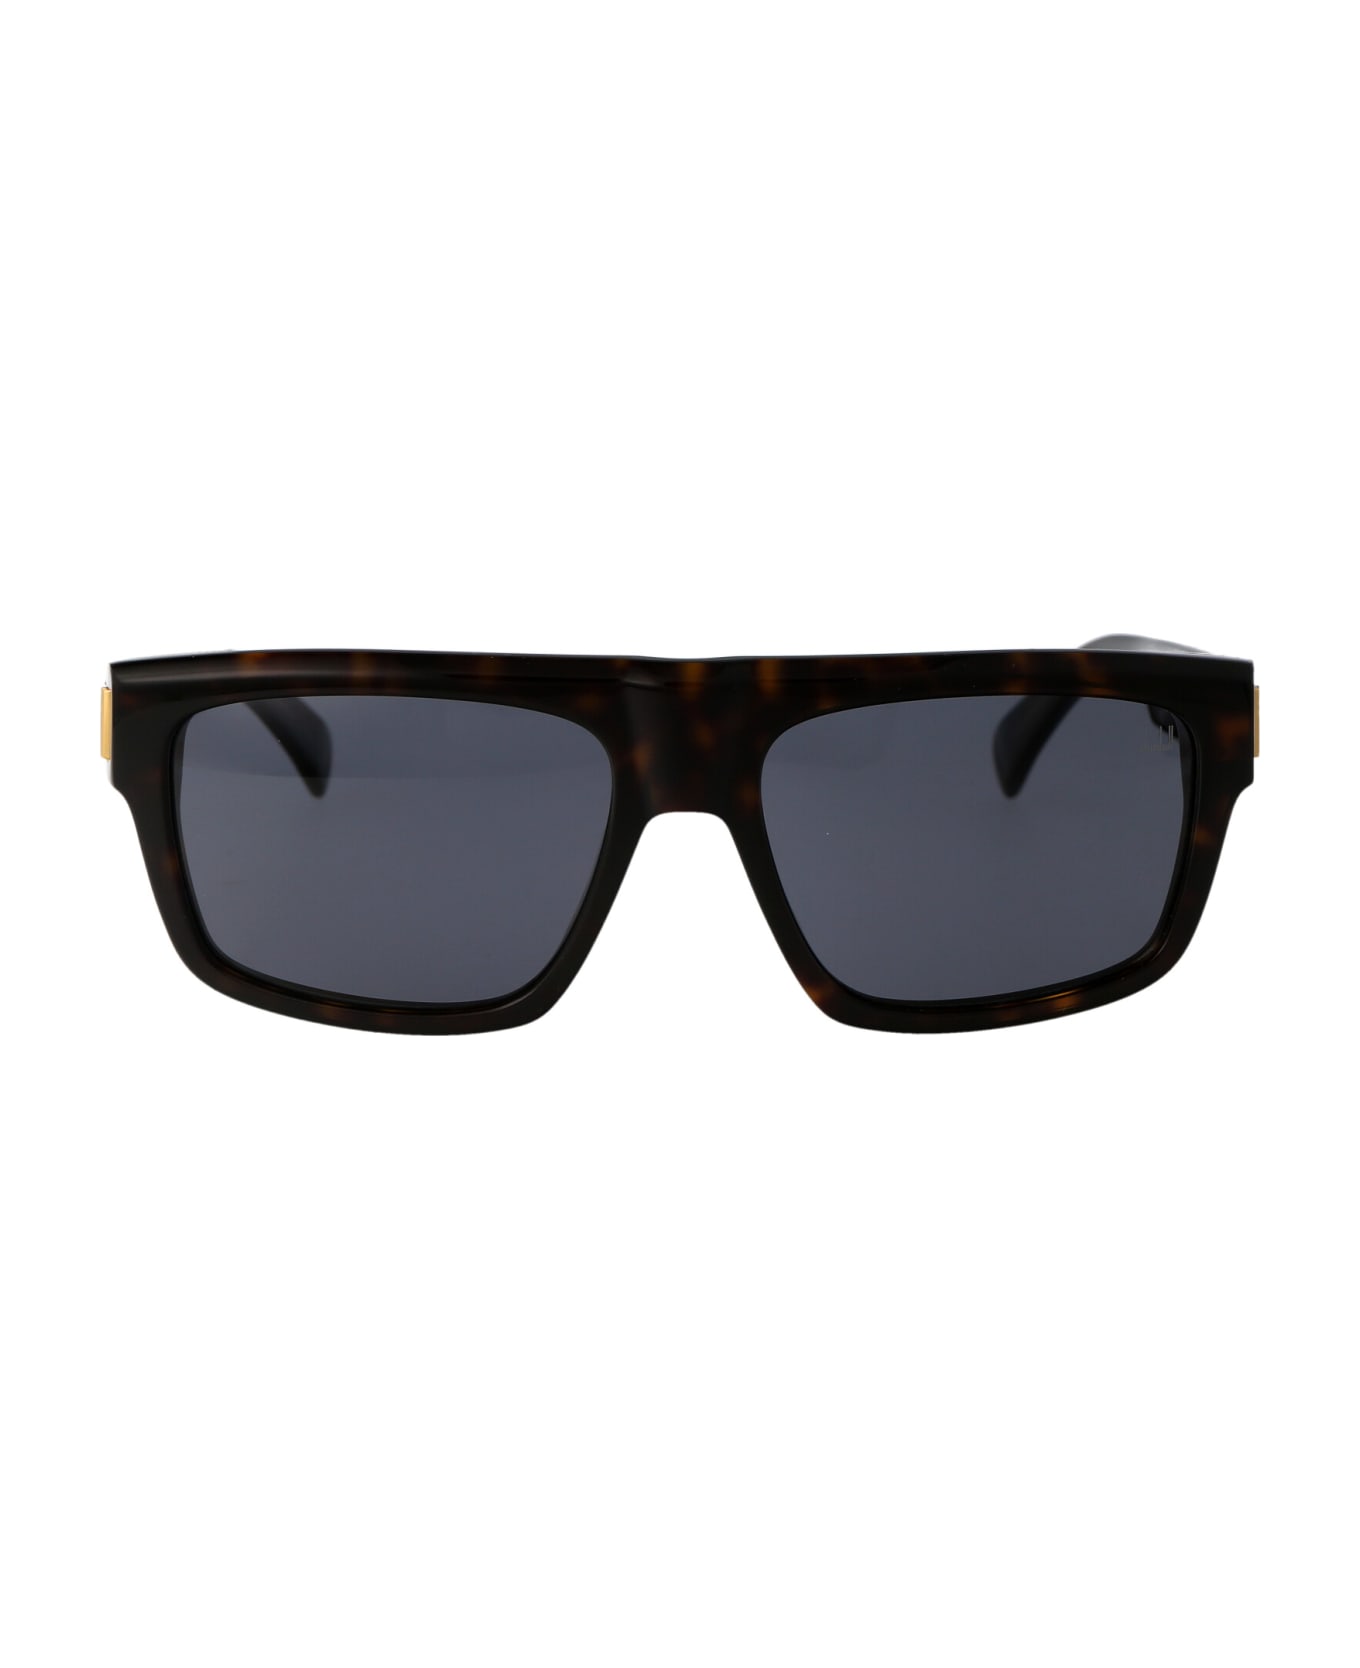 Dunhill Du0054s Sunglasses - 002 BLACK GOLD BROWN